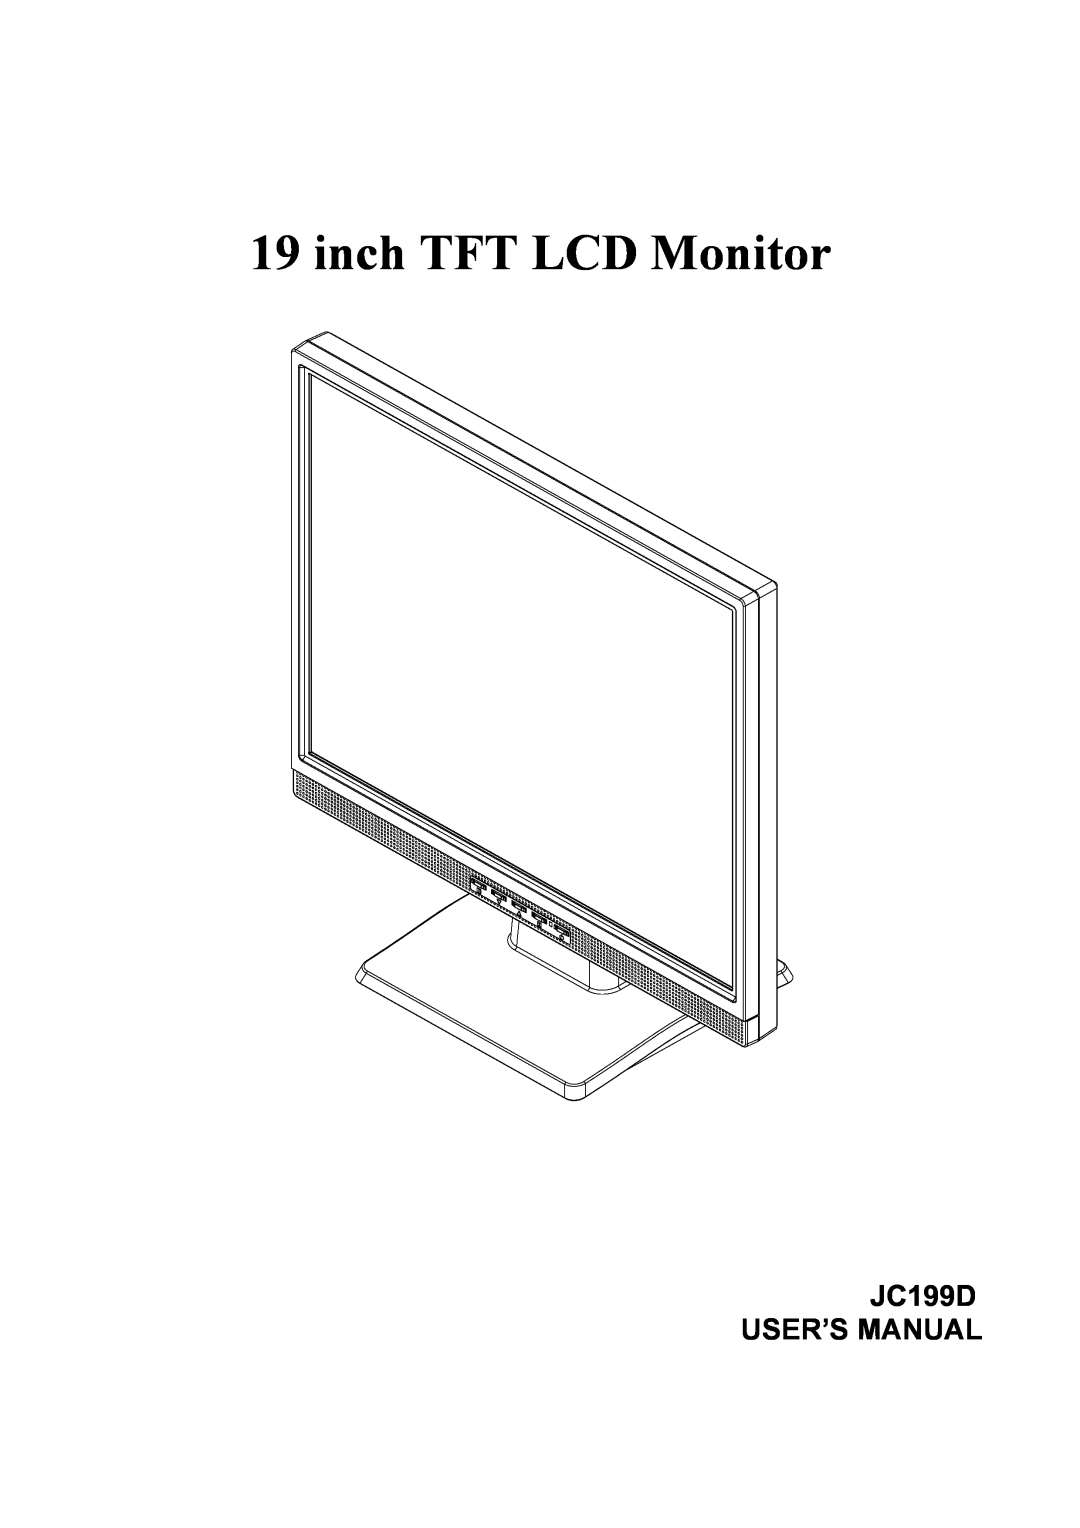 Hanns.G user manual JC199D USER’S MANUAL, inch TFT LCD Monitor 